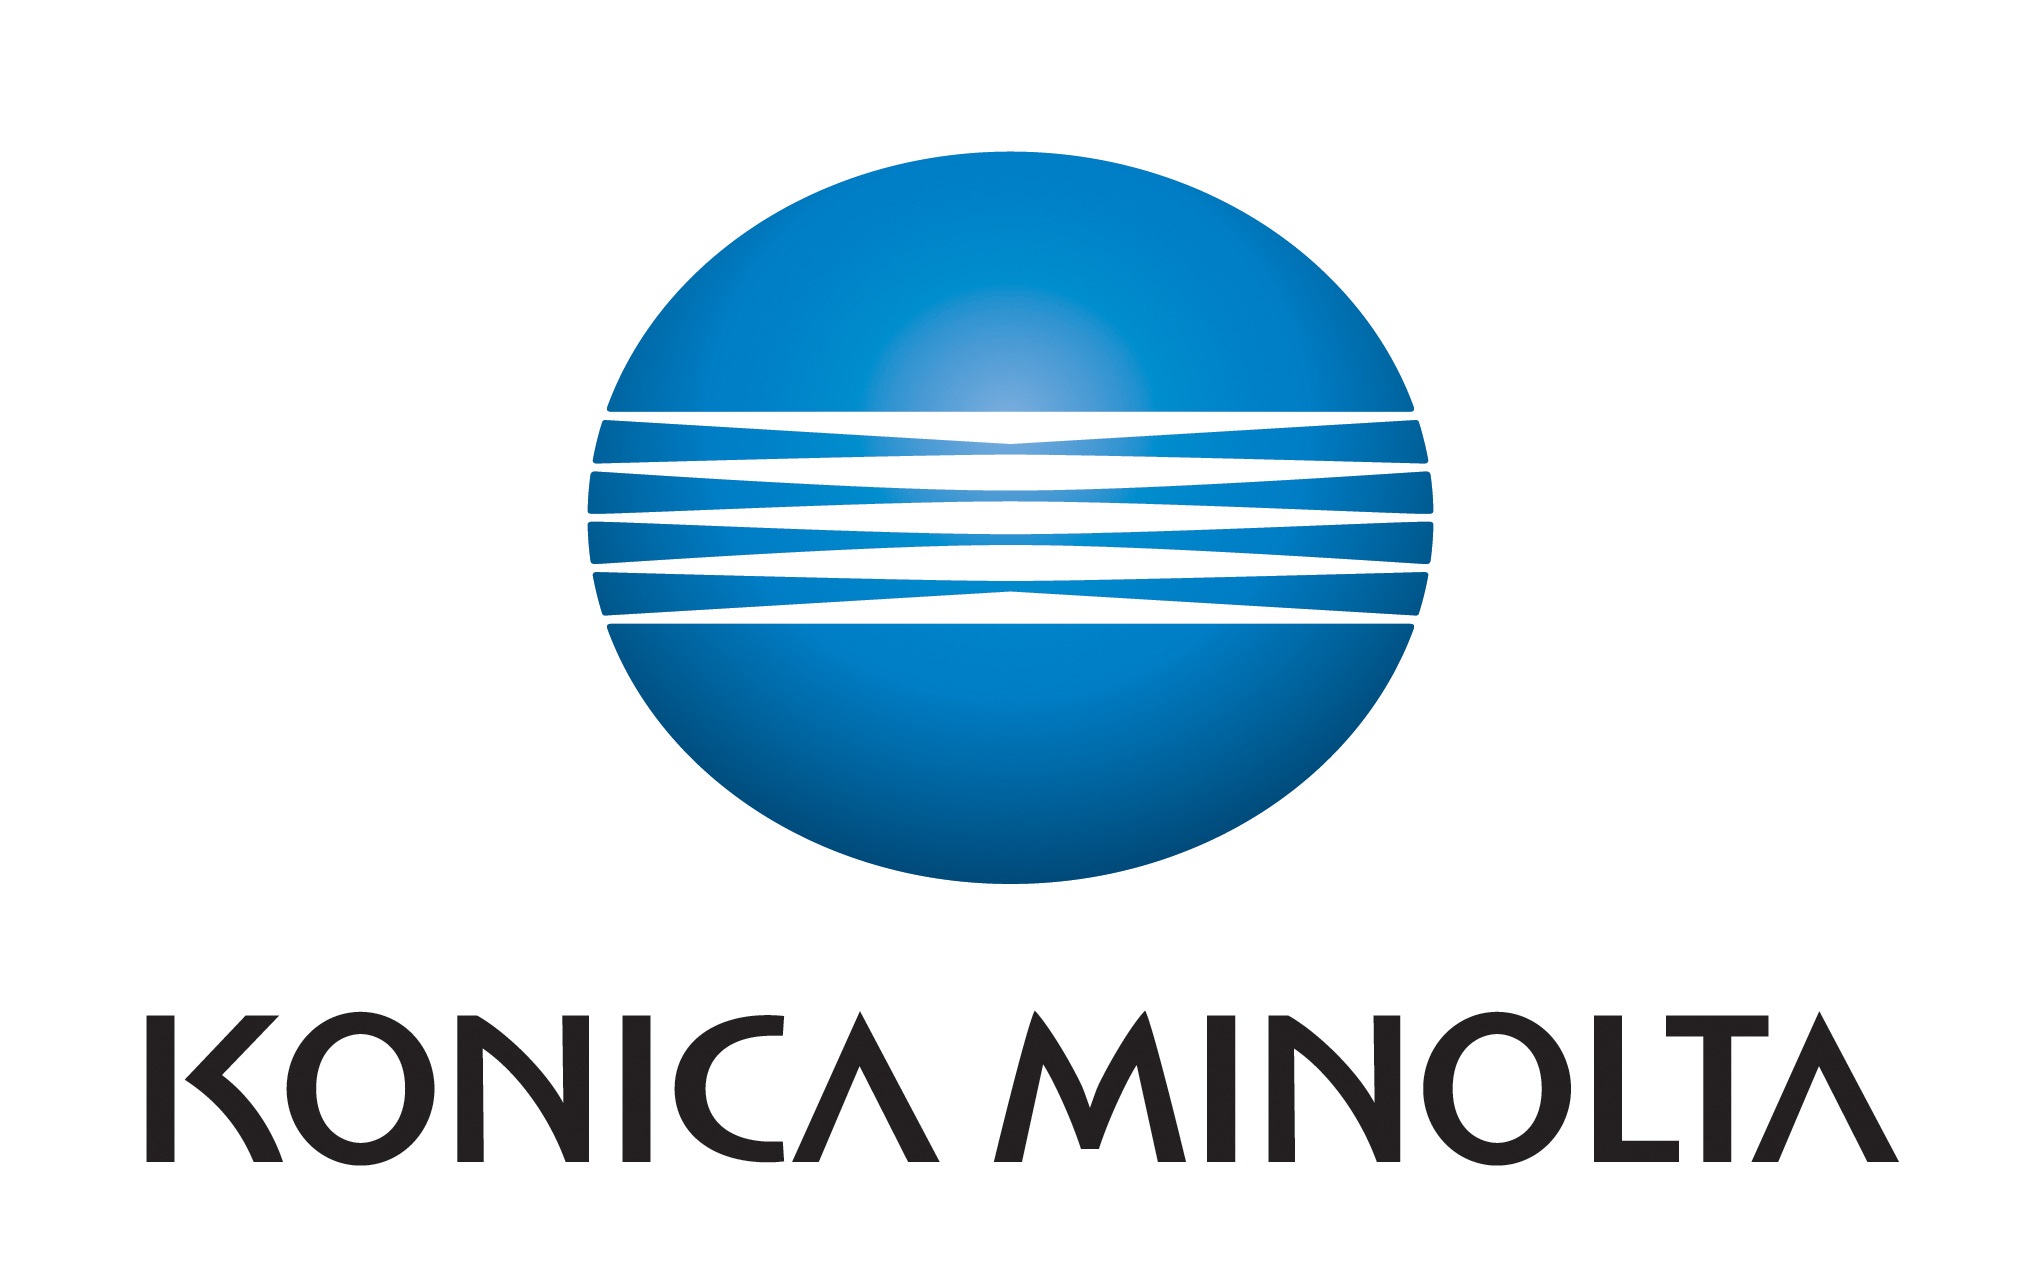 Konica Minolta and A